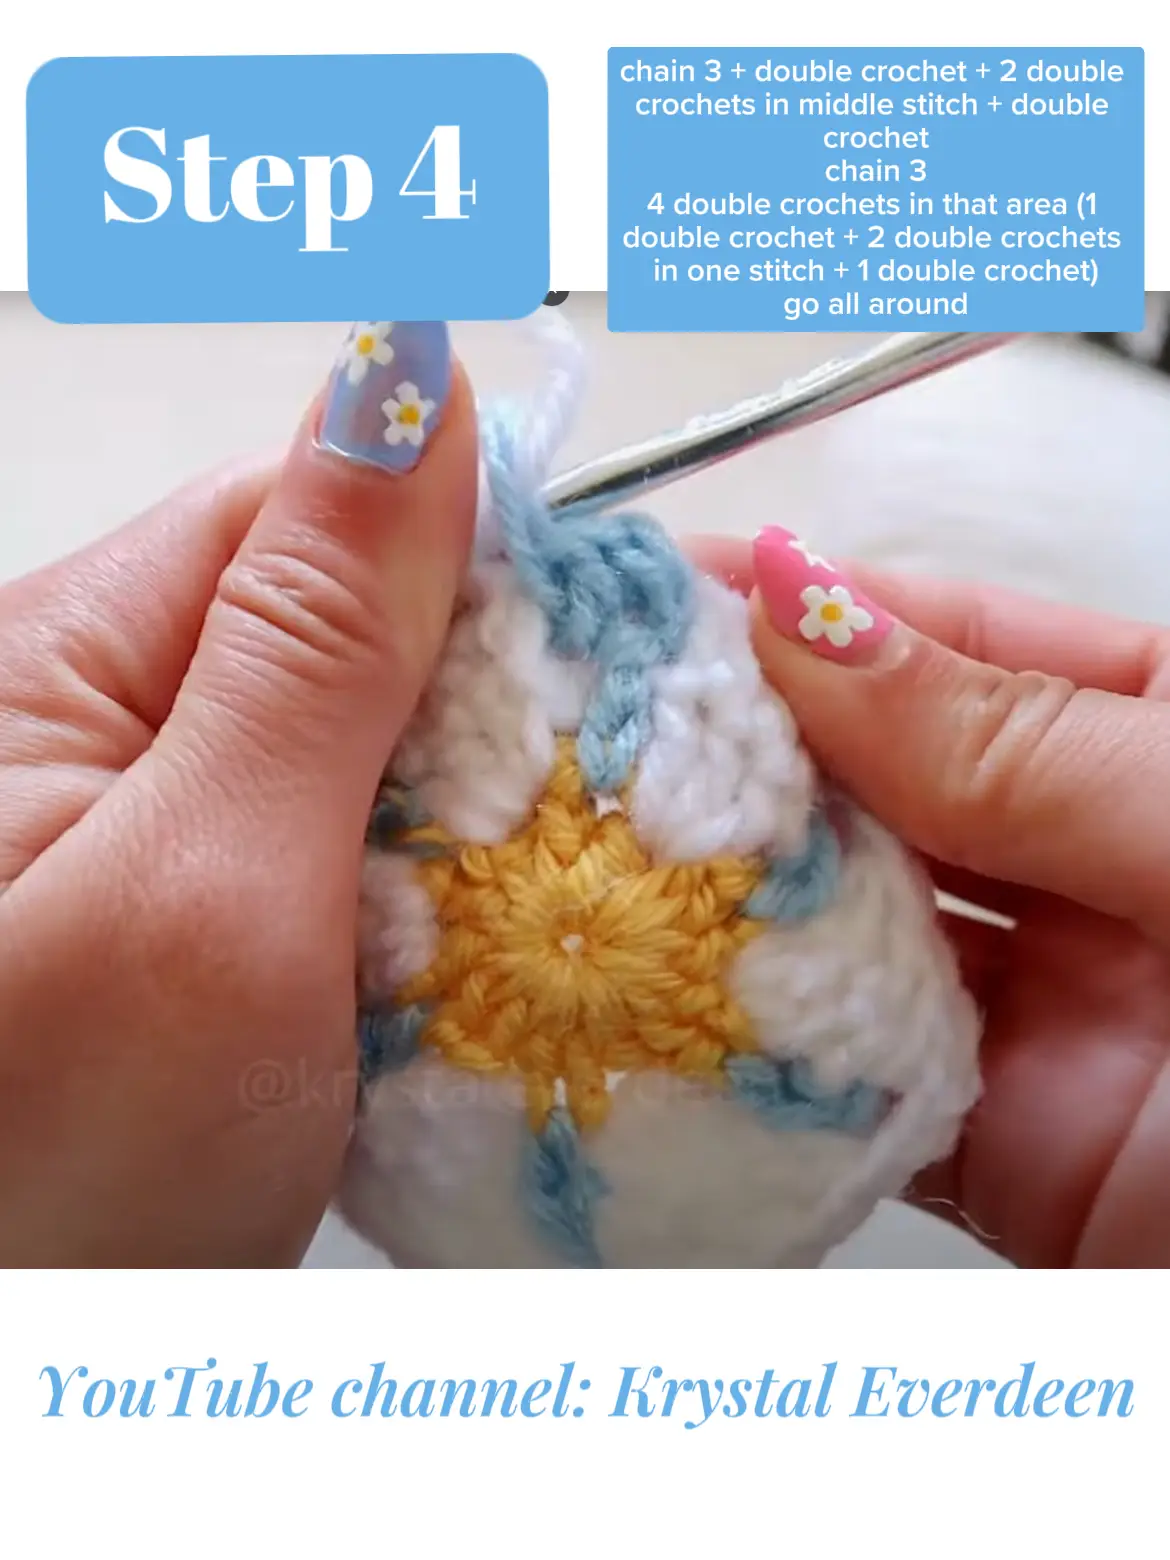 Krystal Everdeen on X: DIY Crochet Top  Boho Crochet Top Tutorial    / X